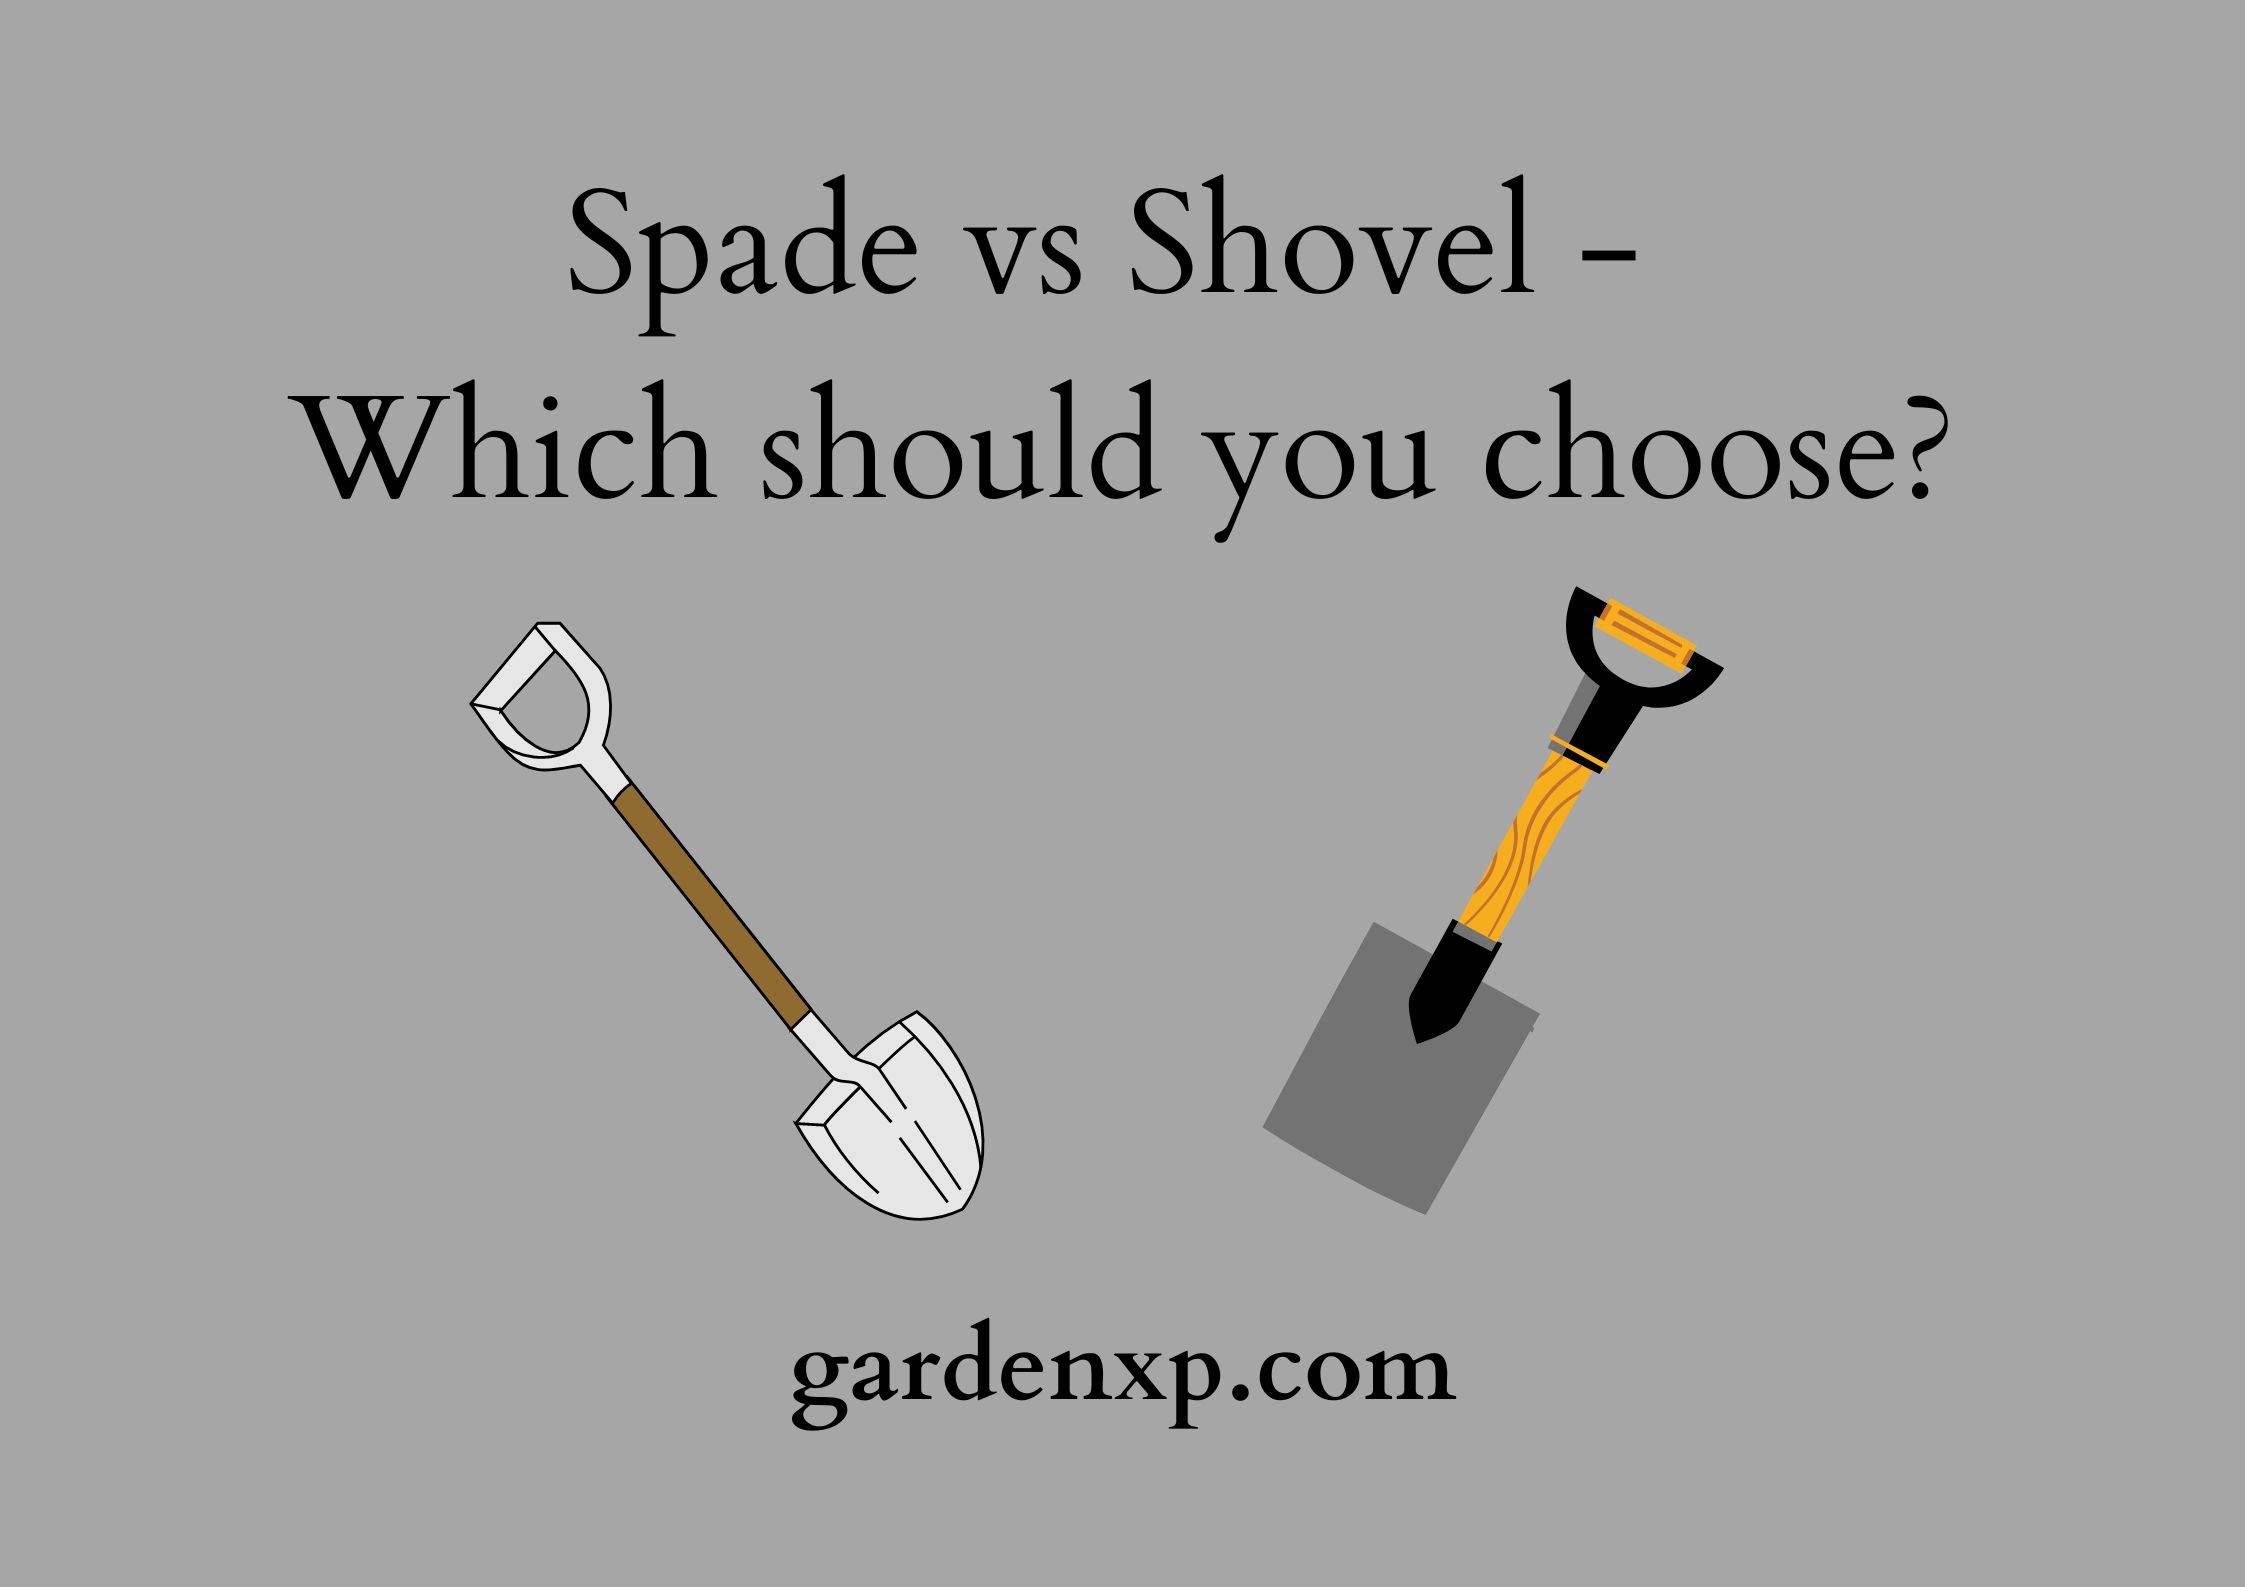 Spade vs Shovel - Which should you choose?